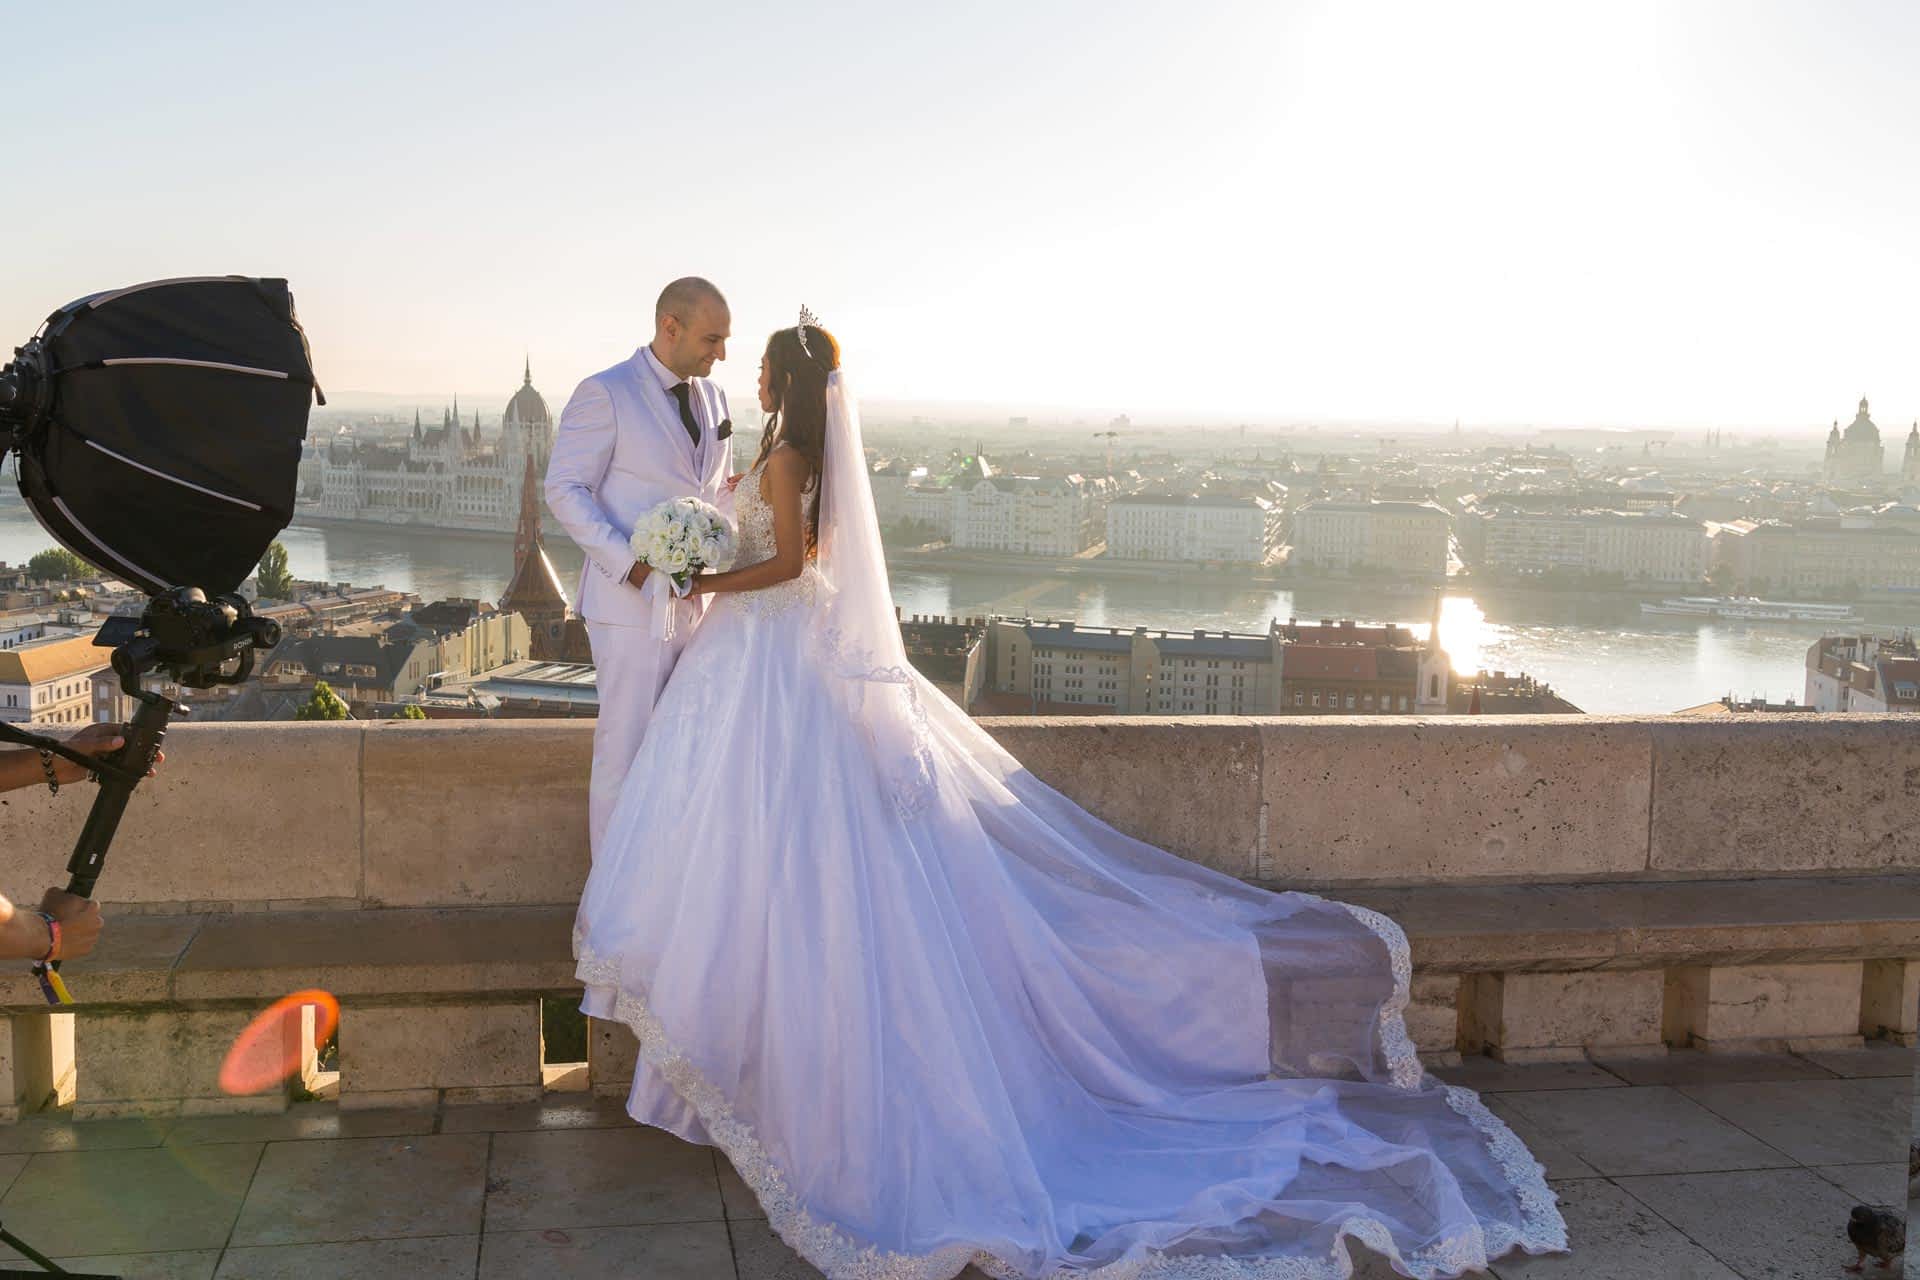 2023 Magic Proposal Photographer & Pre-Wedding Budapest BA prewedding edit Instawalk Your memories captured by a local Photographer / Videographer in Budapest.